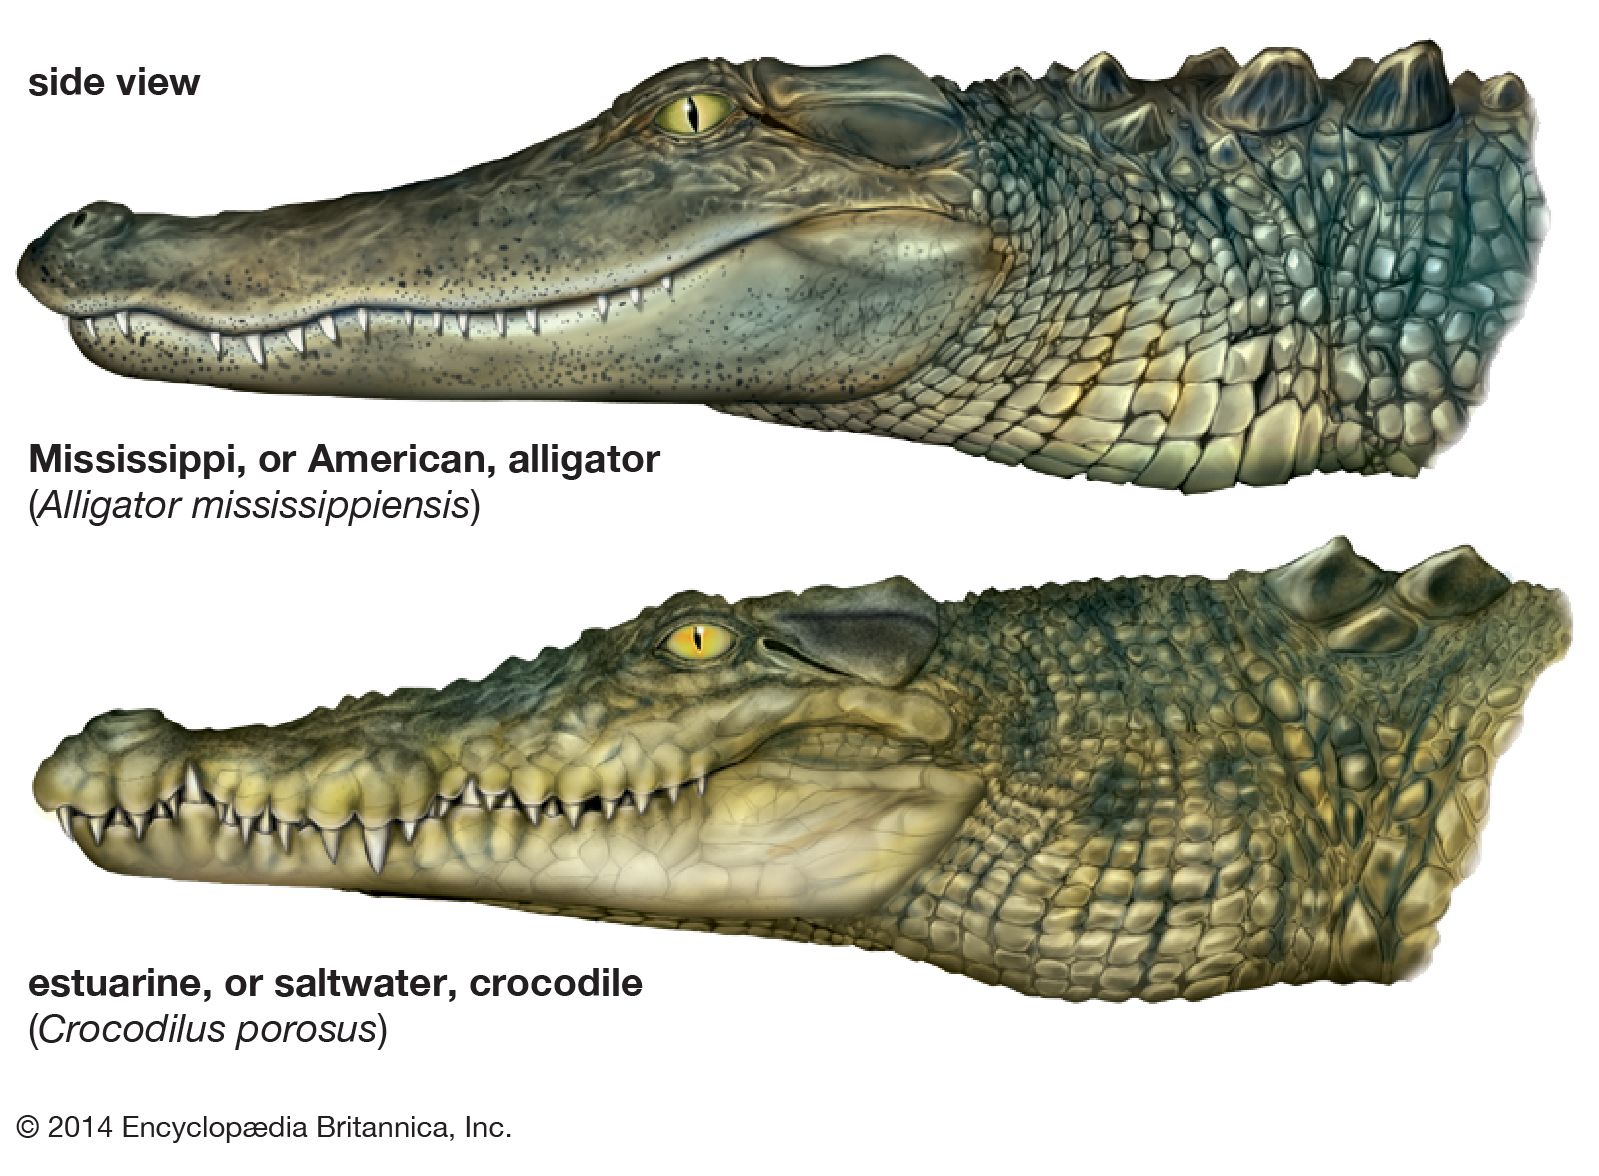 Crocodiles-alligators-teeth-snouts-crocodiles-mouth.jpg